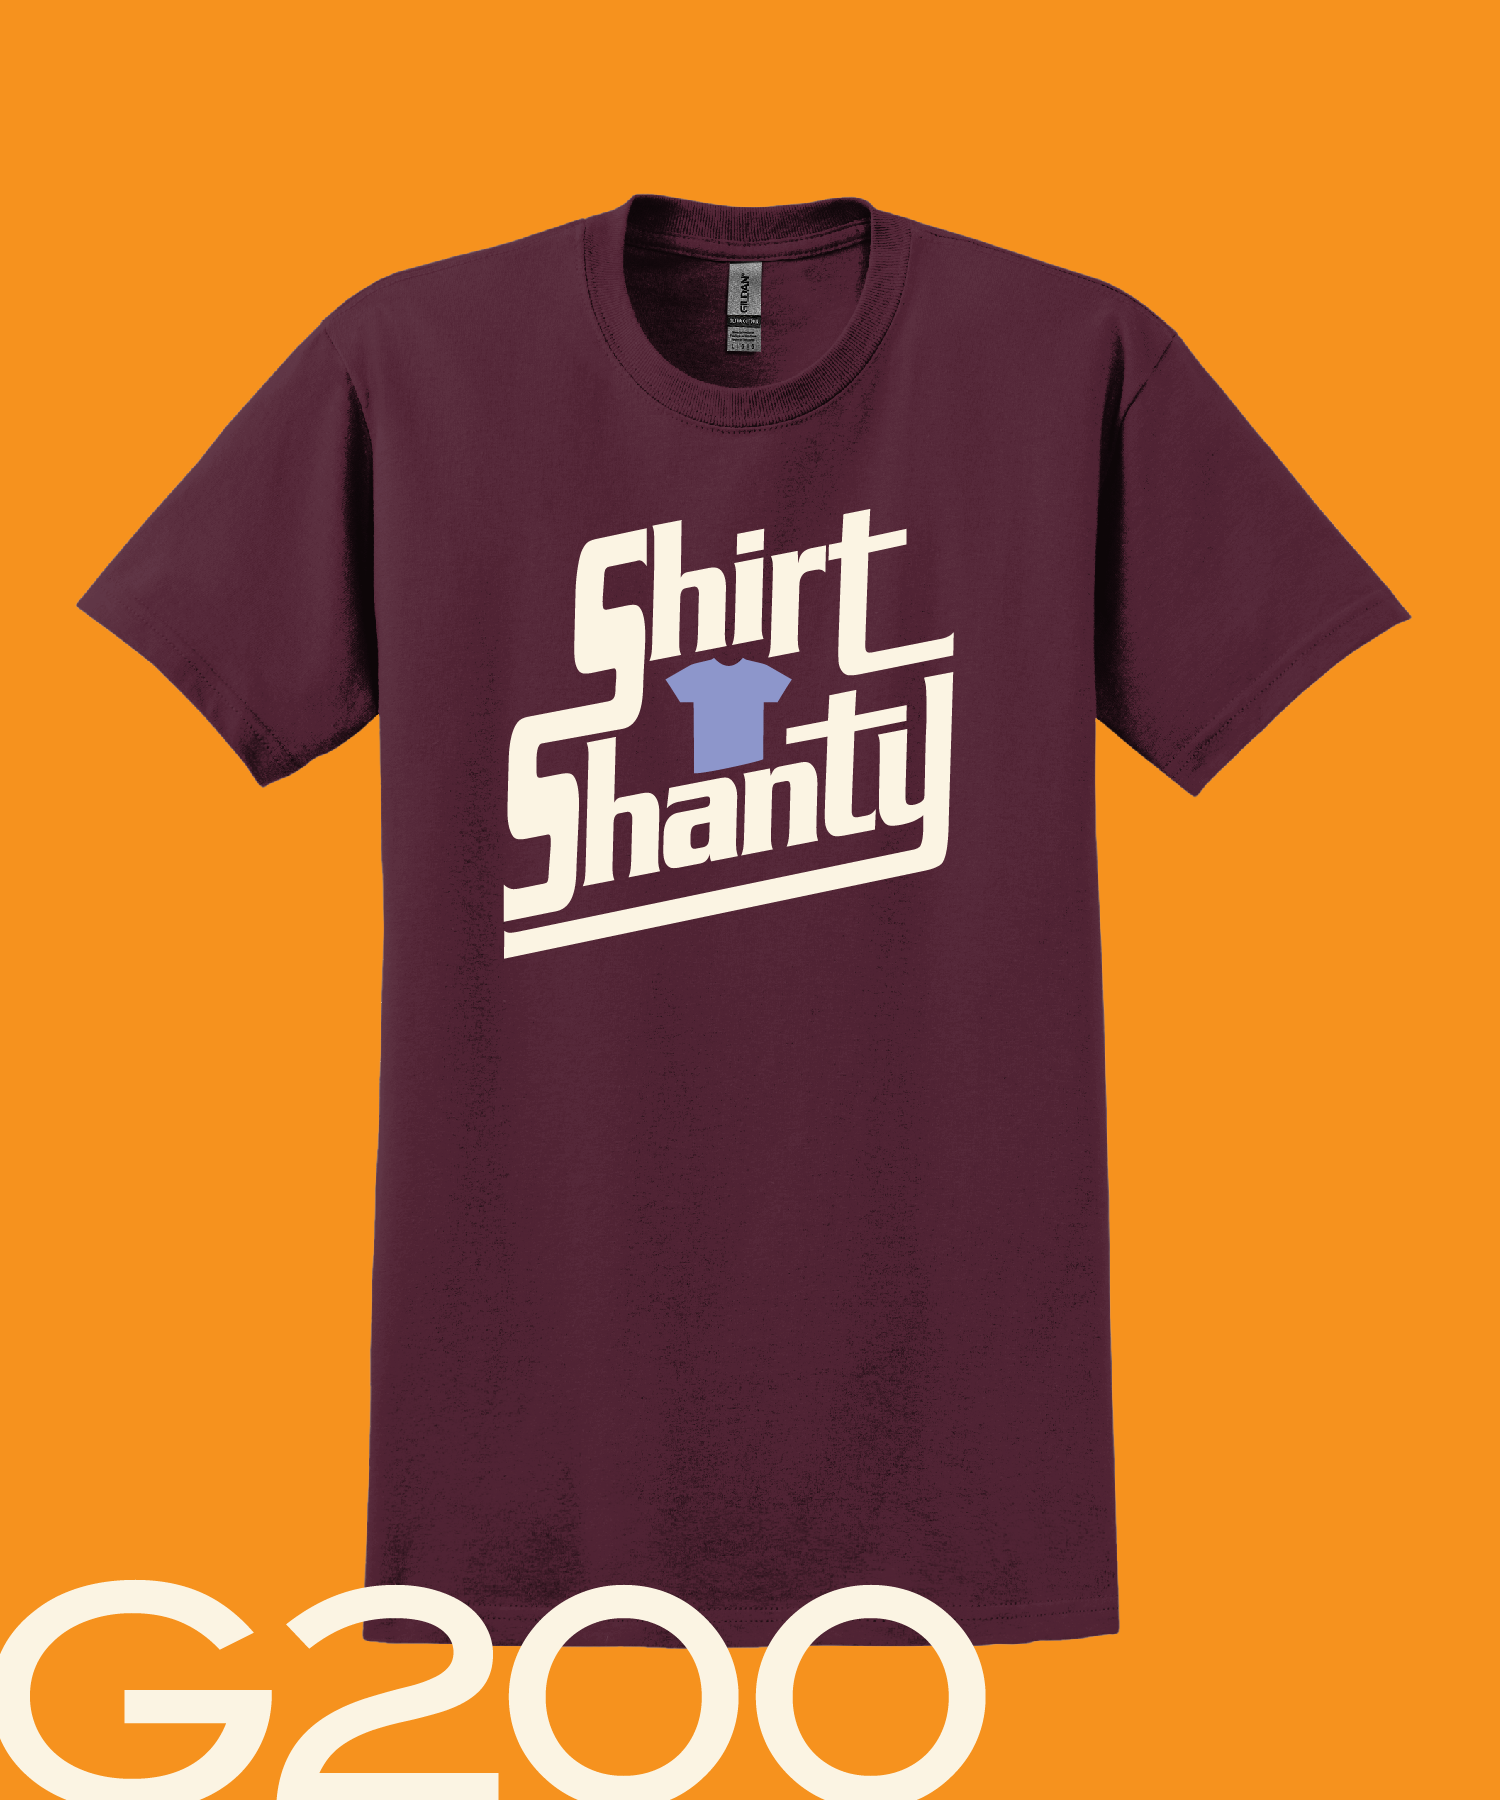 T-shirt Printing Company Atlanta - Custom T Shirt Printing